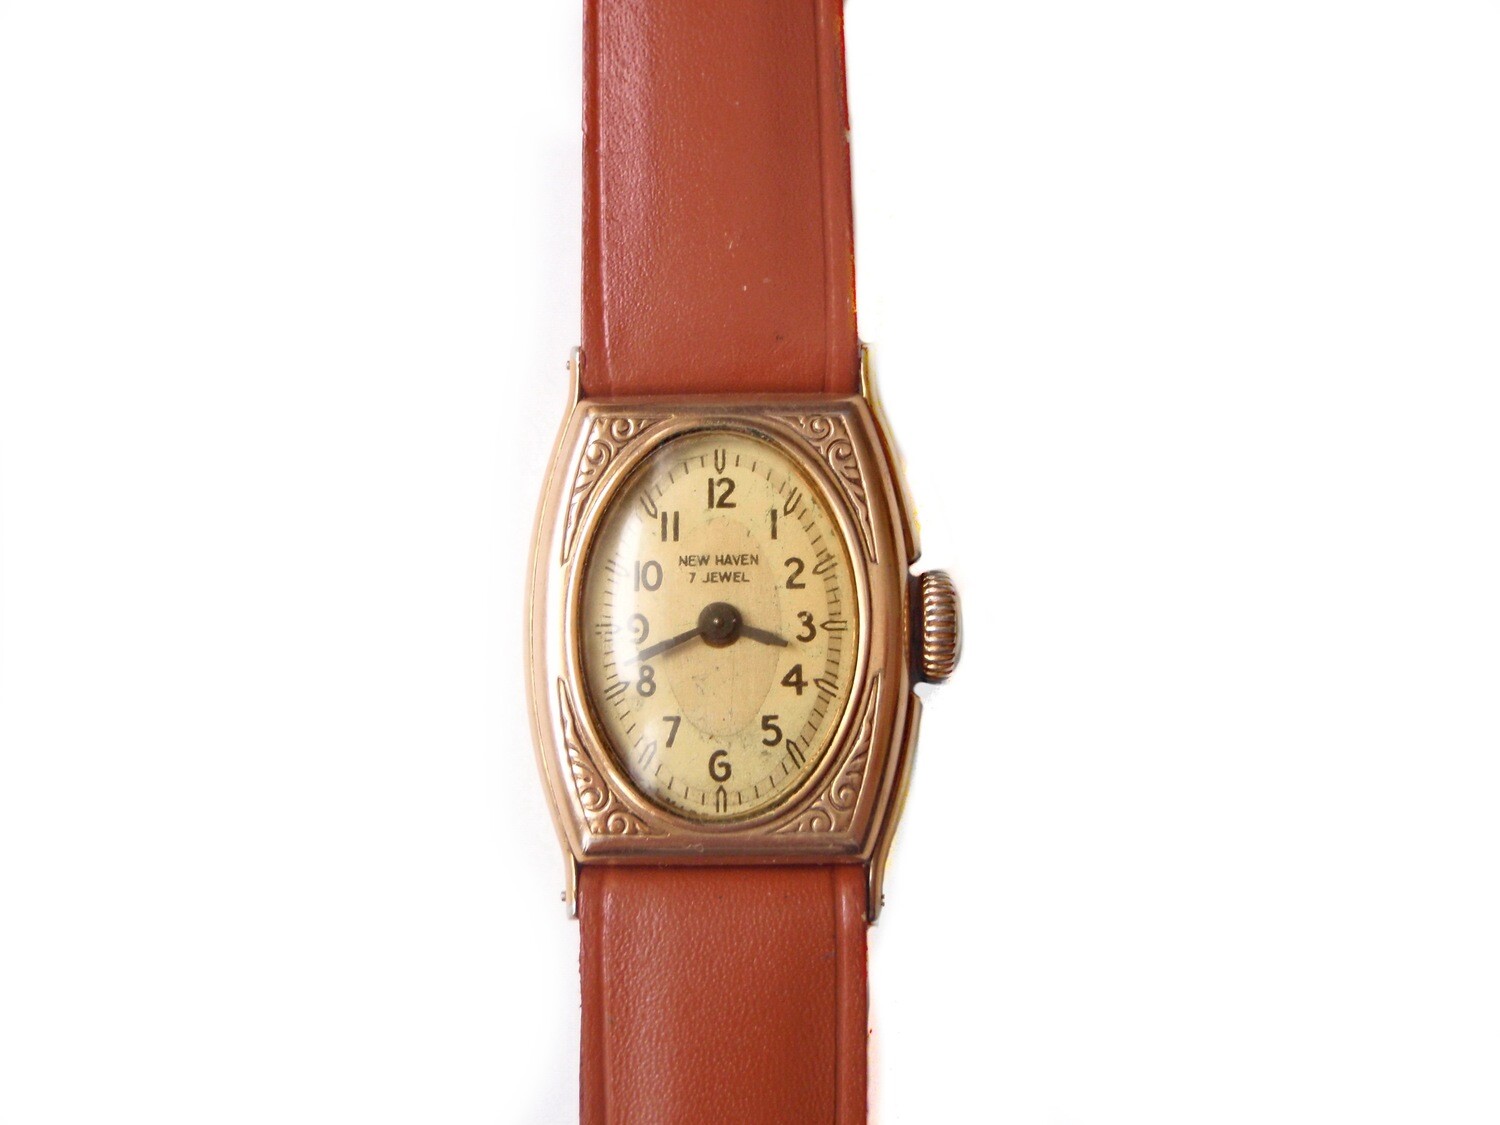 Rare 1920s New Haven Ladies Tw0 Tone Dial Watch